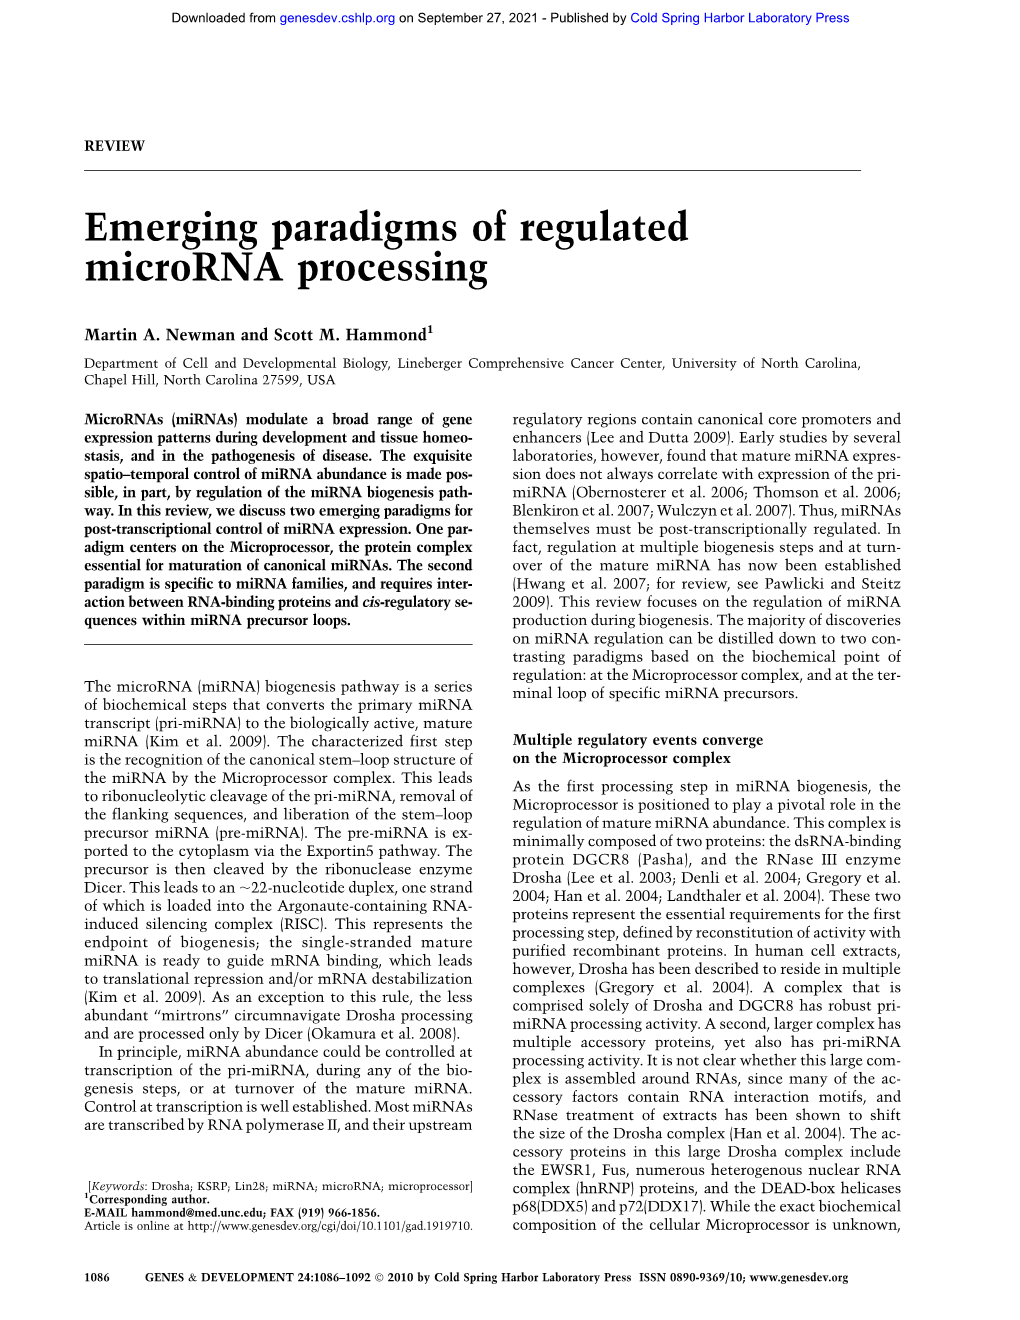 Emerging Paradigms of Regulated Microrna Processing